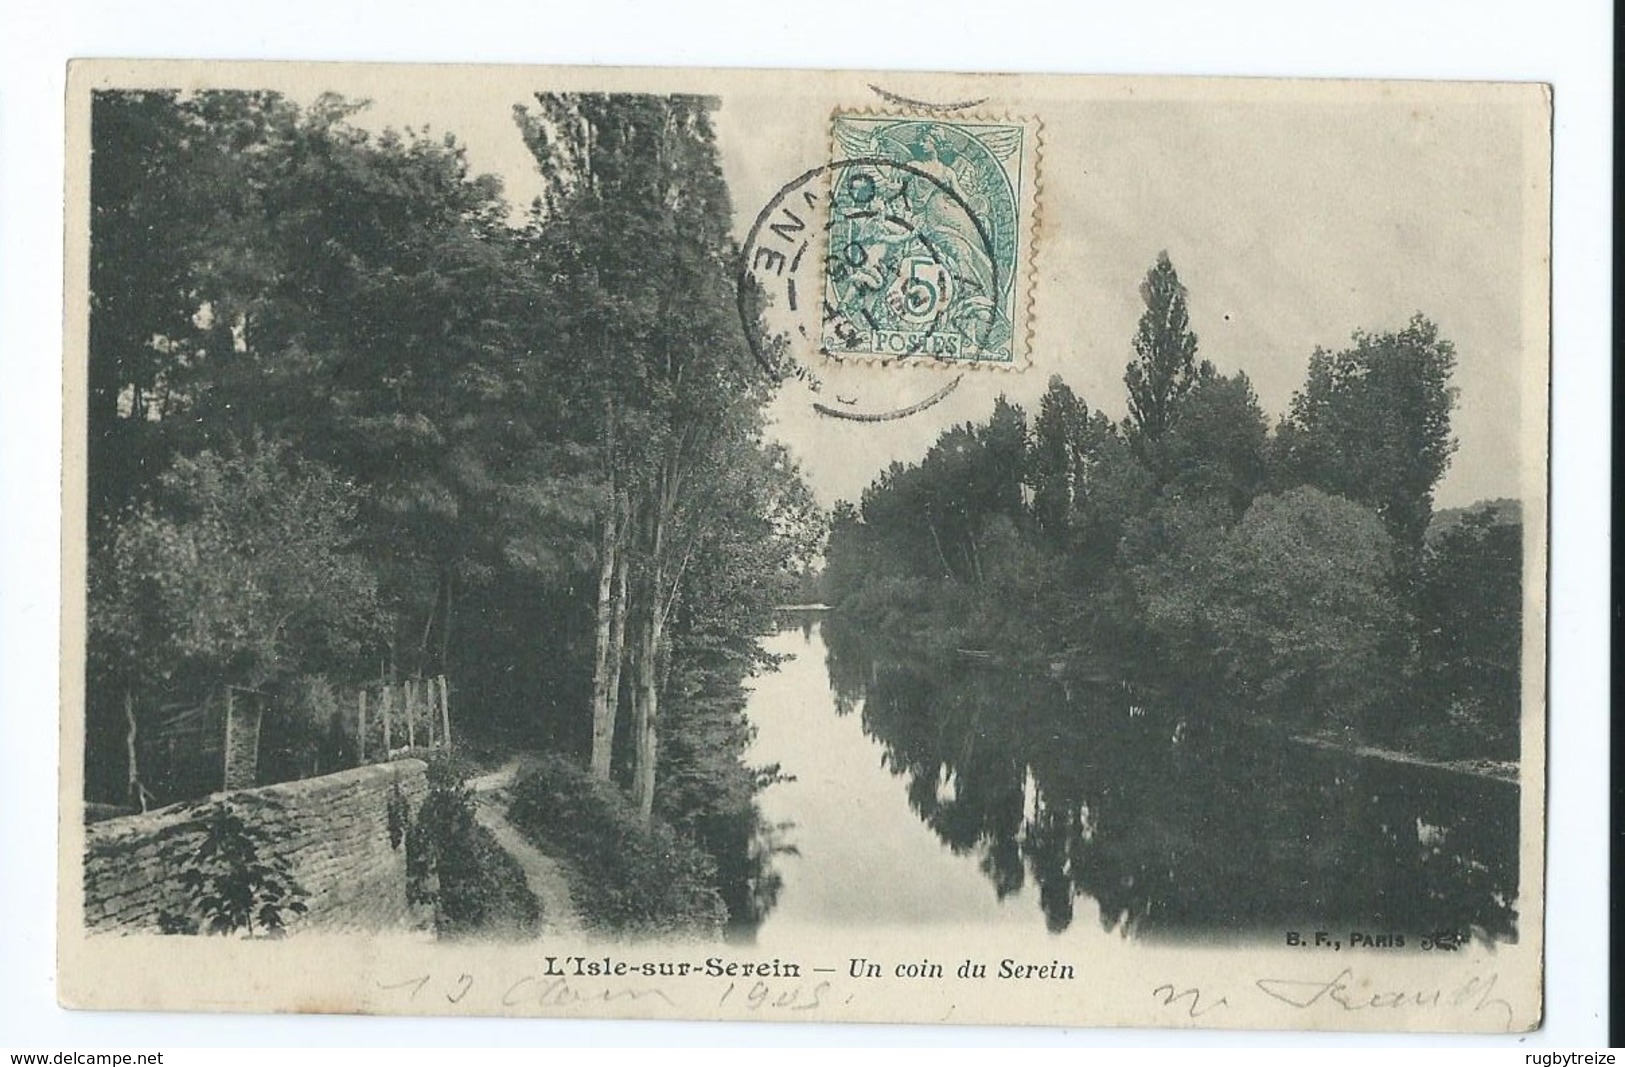 2801 Lot de 50 cartes postales anciennes - petites cartes drouille WW1 Rosny Nangis Metz Epernay Dunkerque etc...